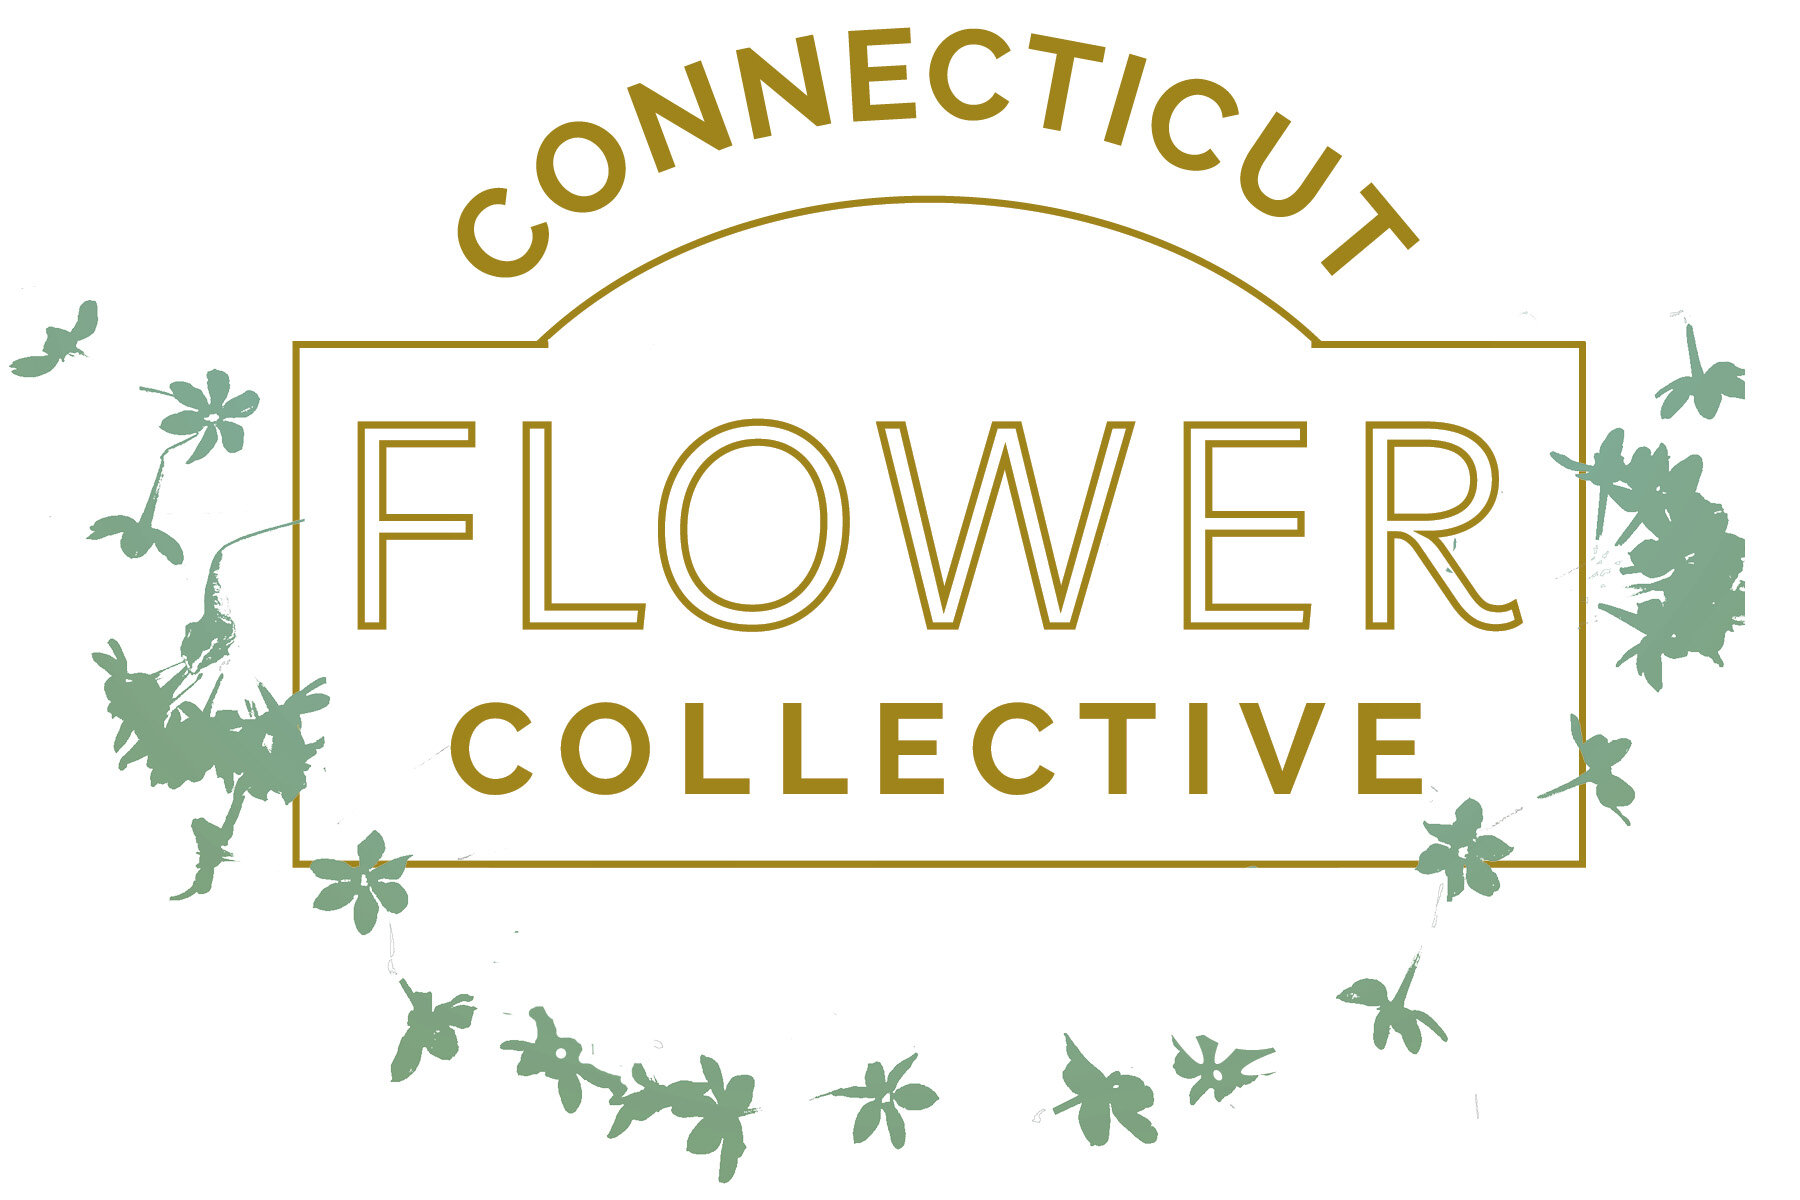 Connecticut Flower Collective